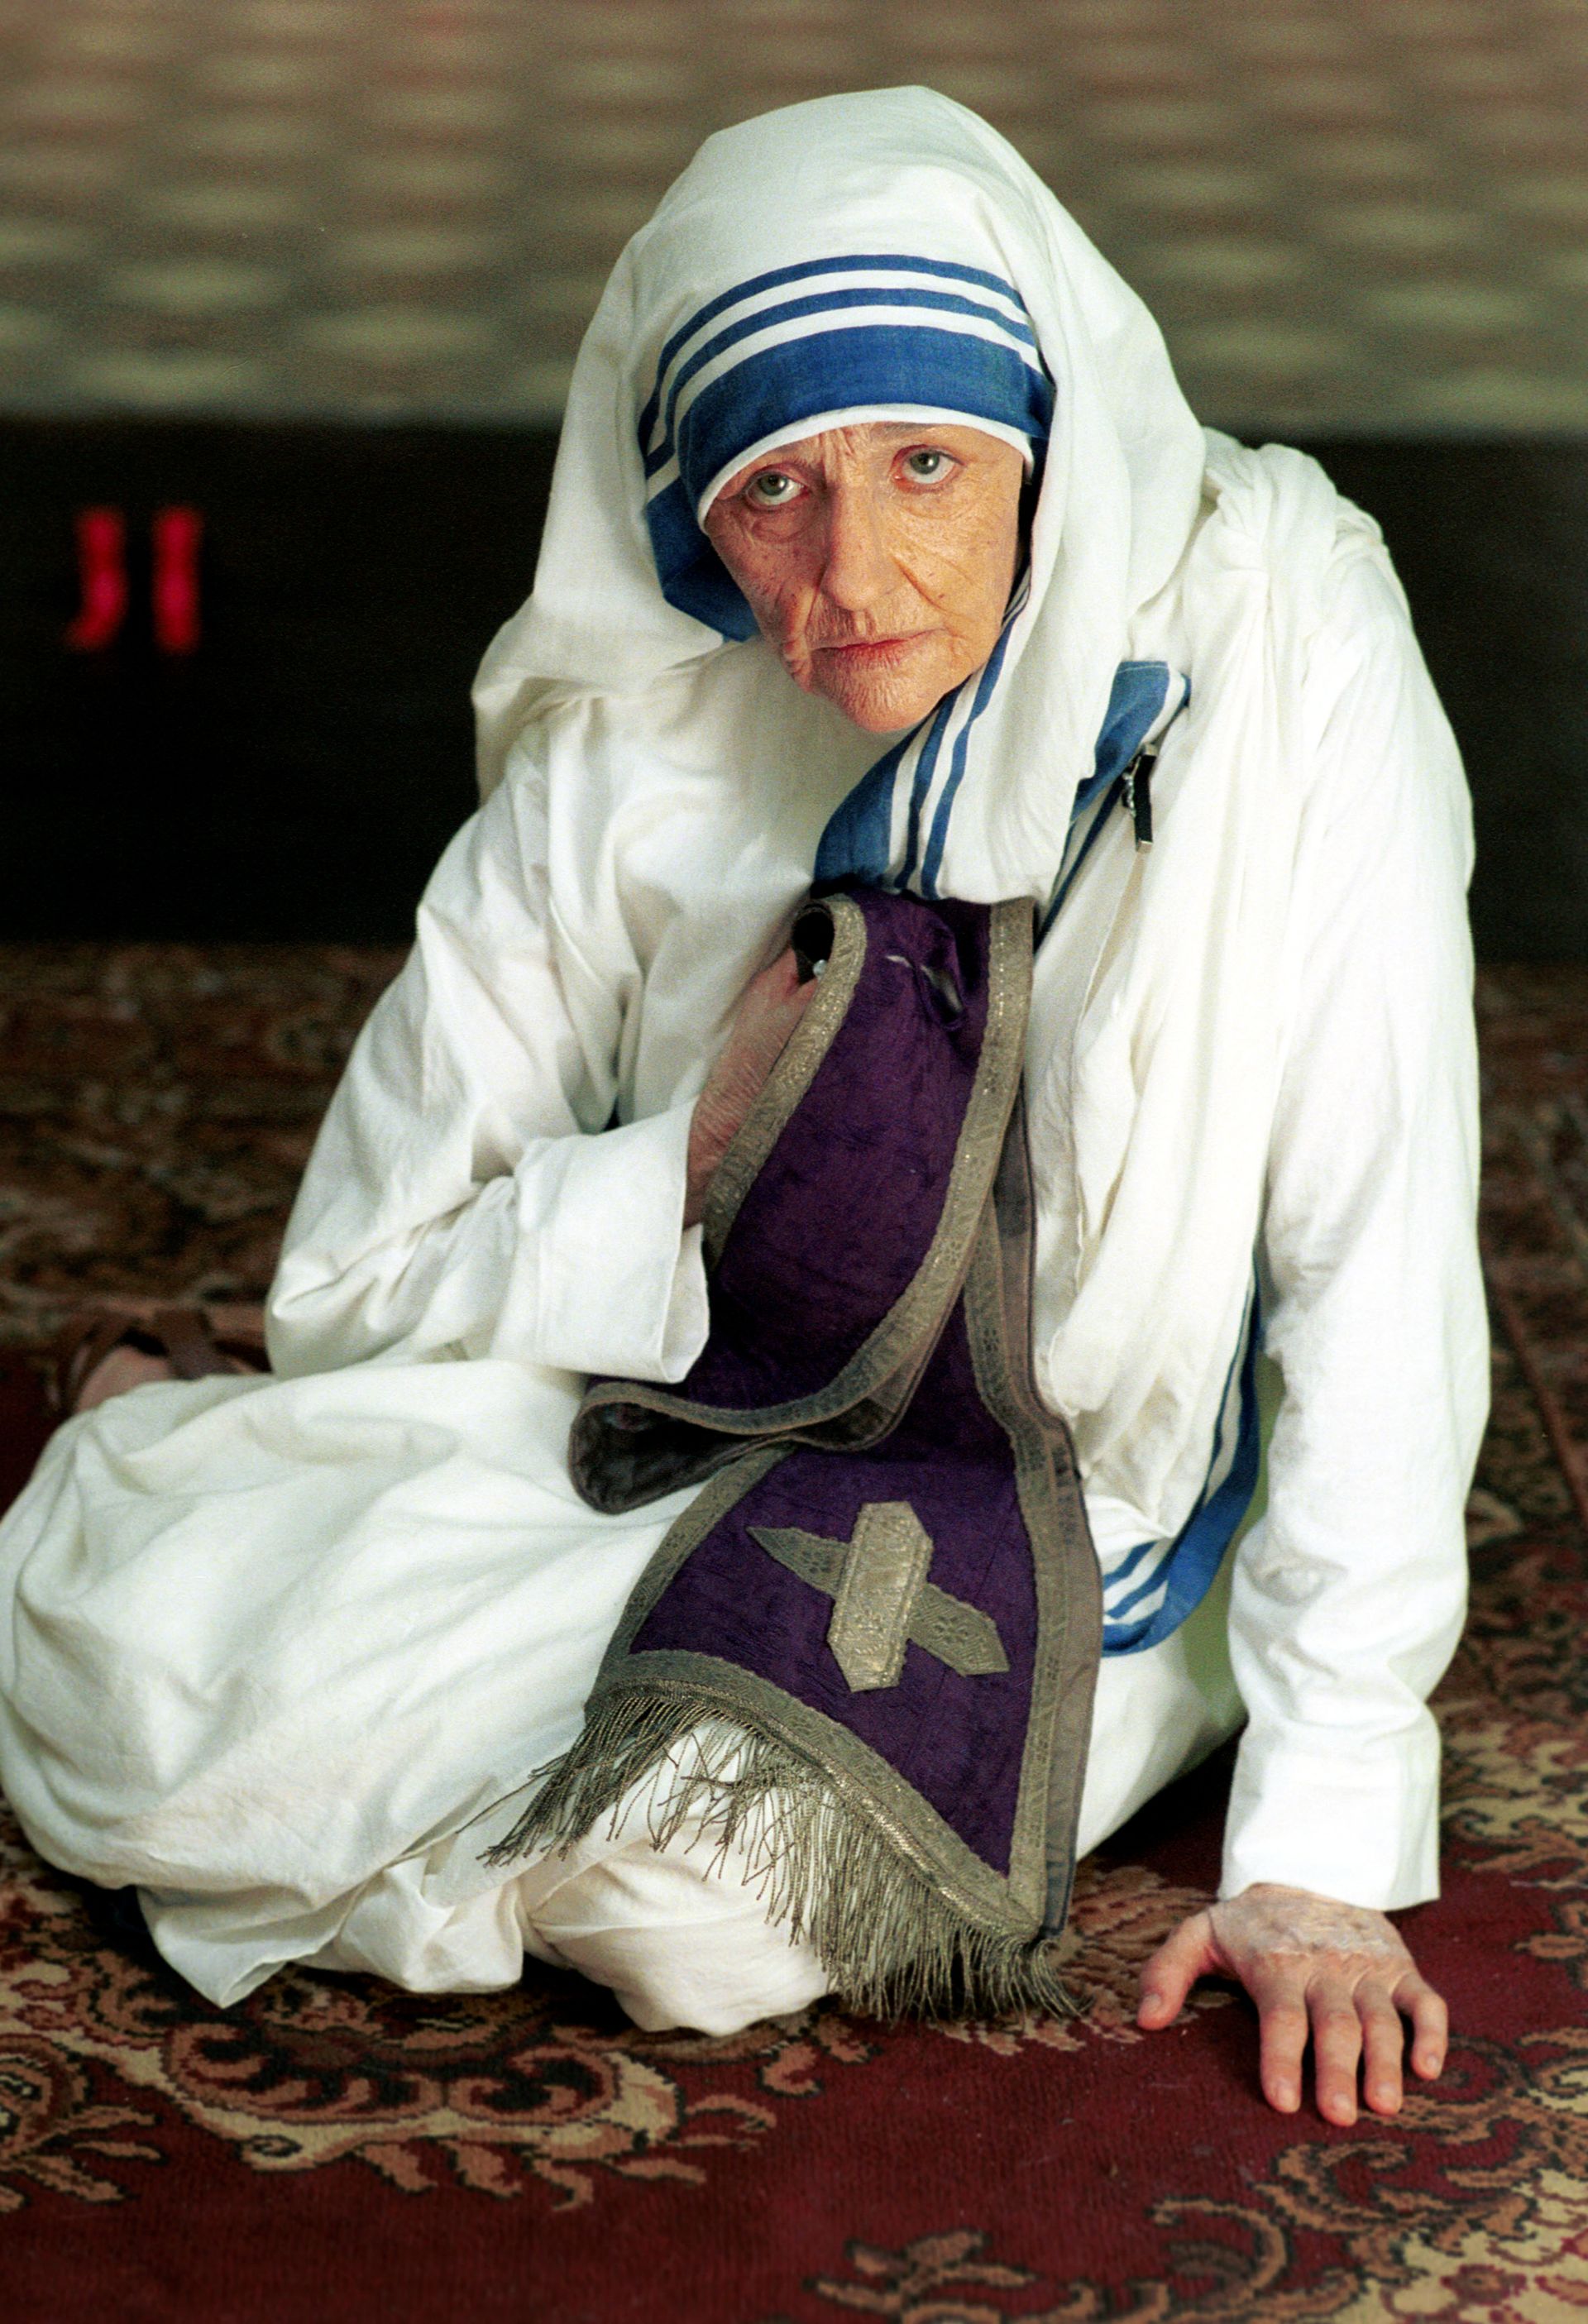 Le film présentant la vie de Mère Teresa sortira en salles en octobre